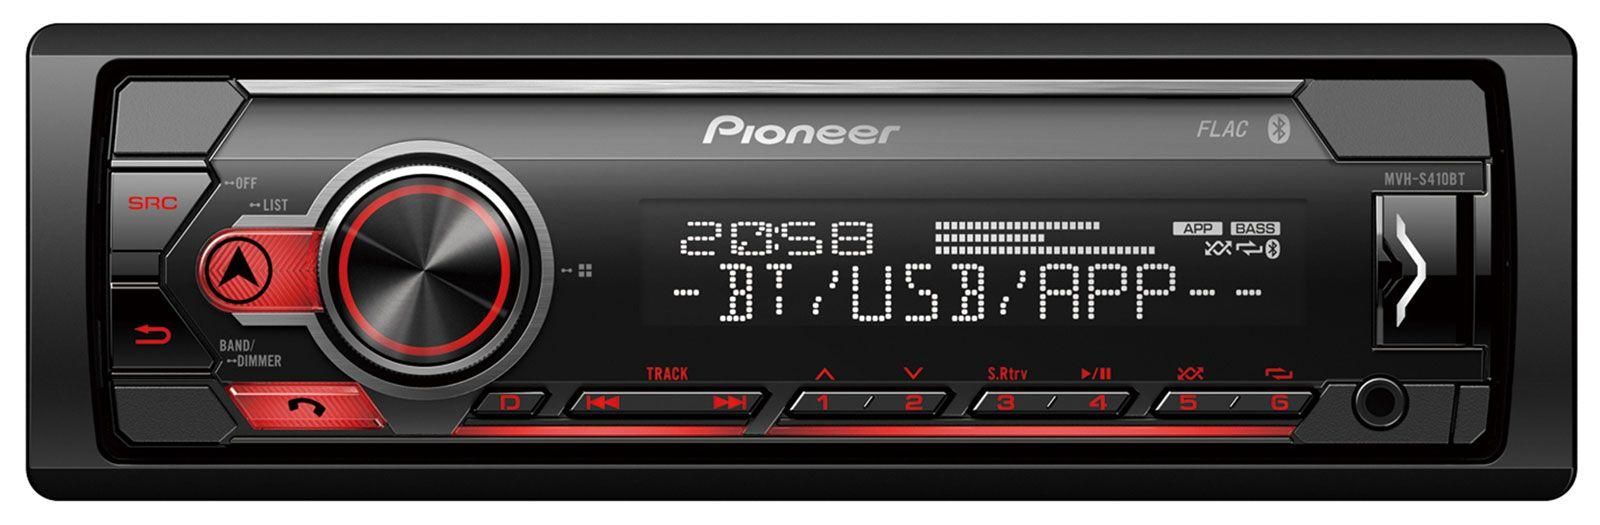 Pioneer 2DIN MP3 AUX USB Bluetooth Autoradio für Alfa Romeo Mito ISO 955 08-14 s